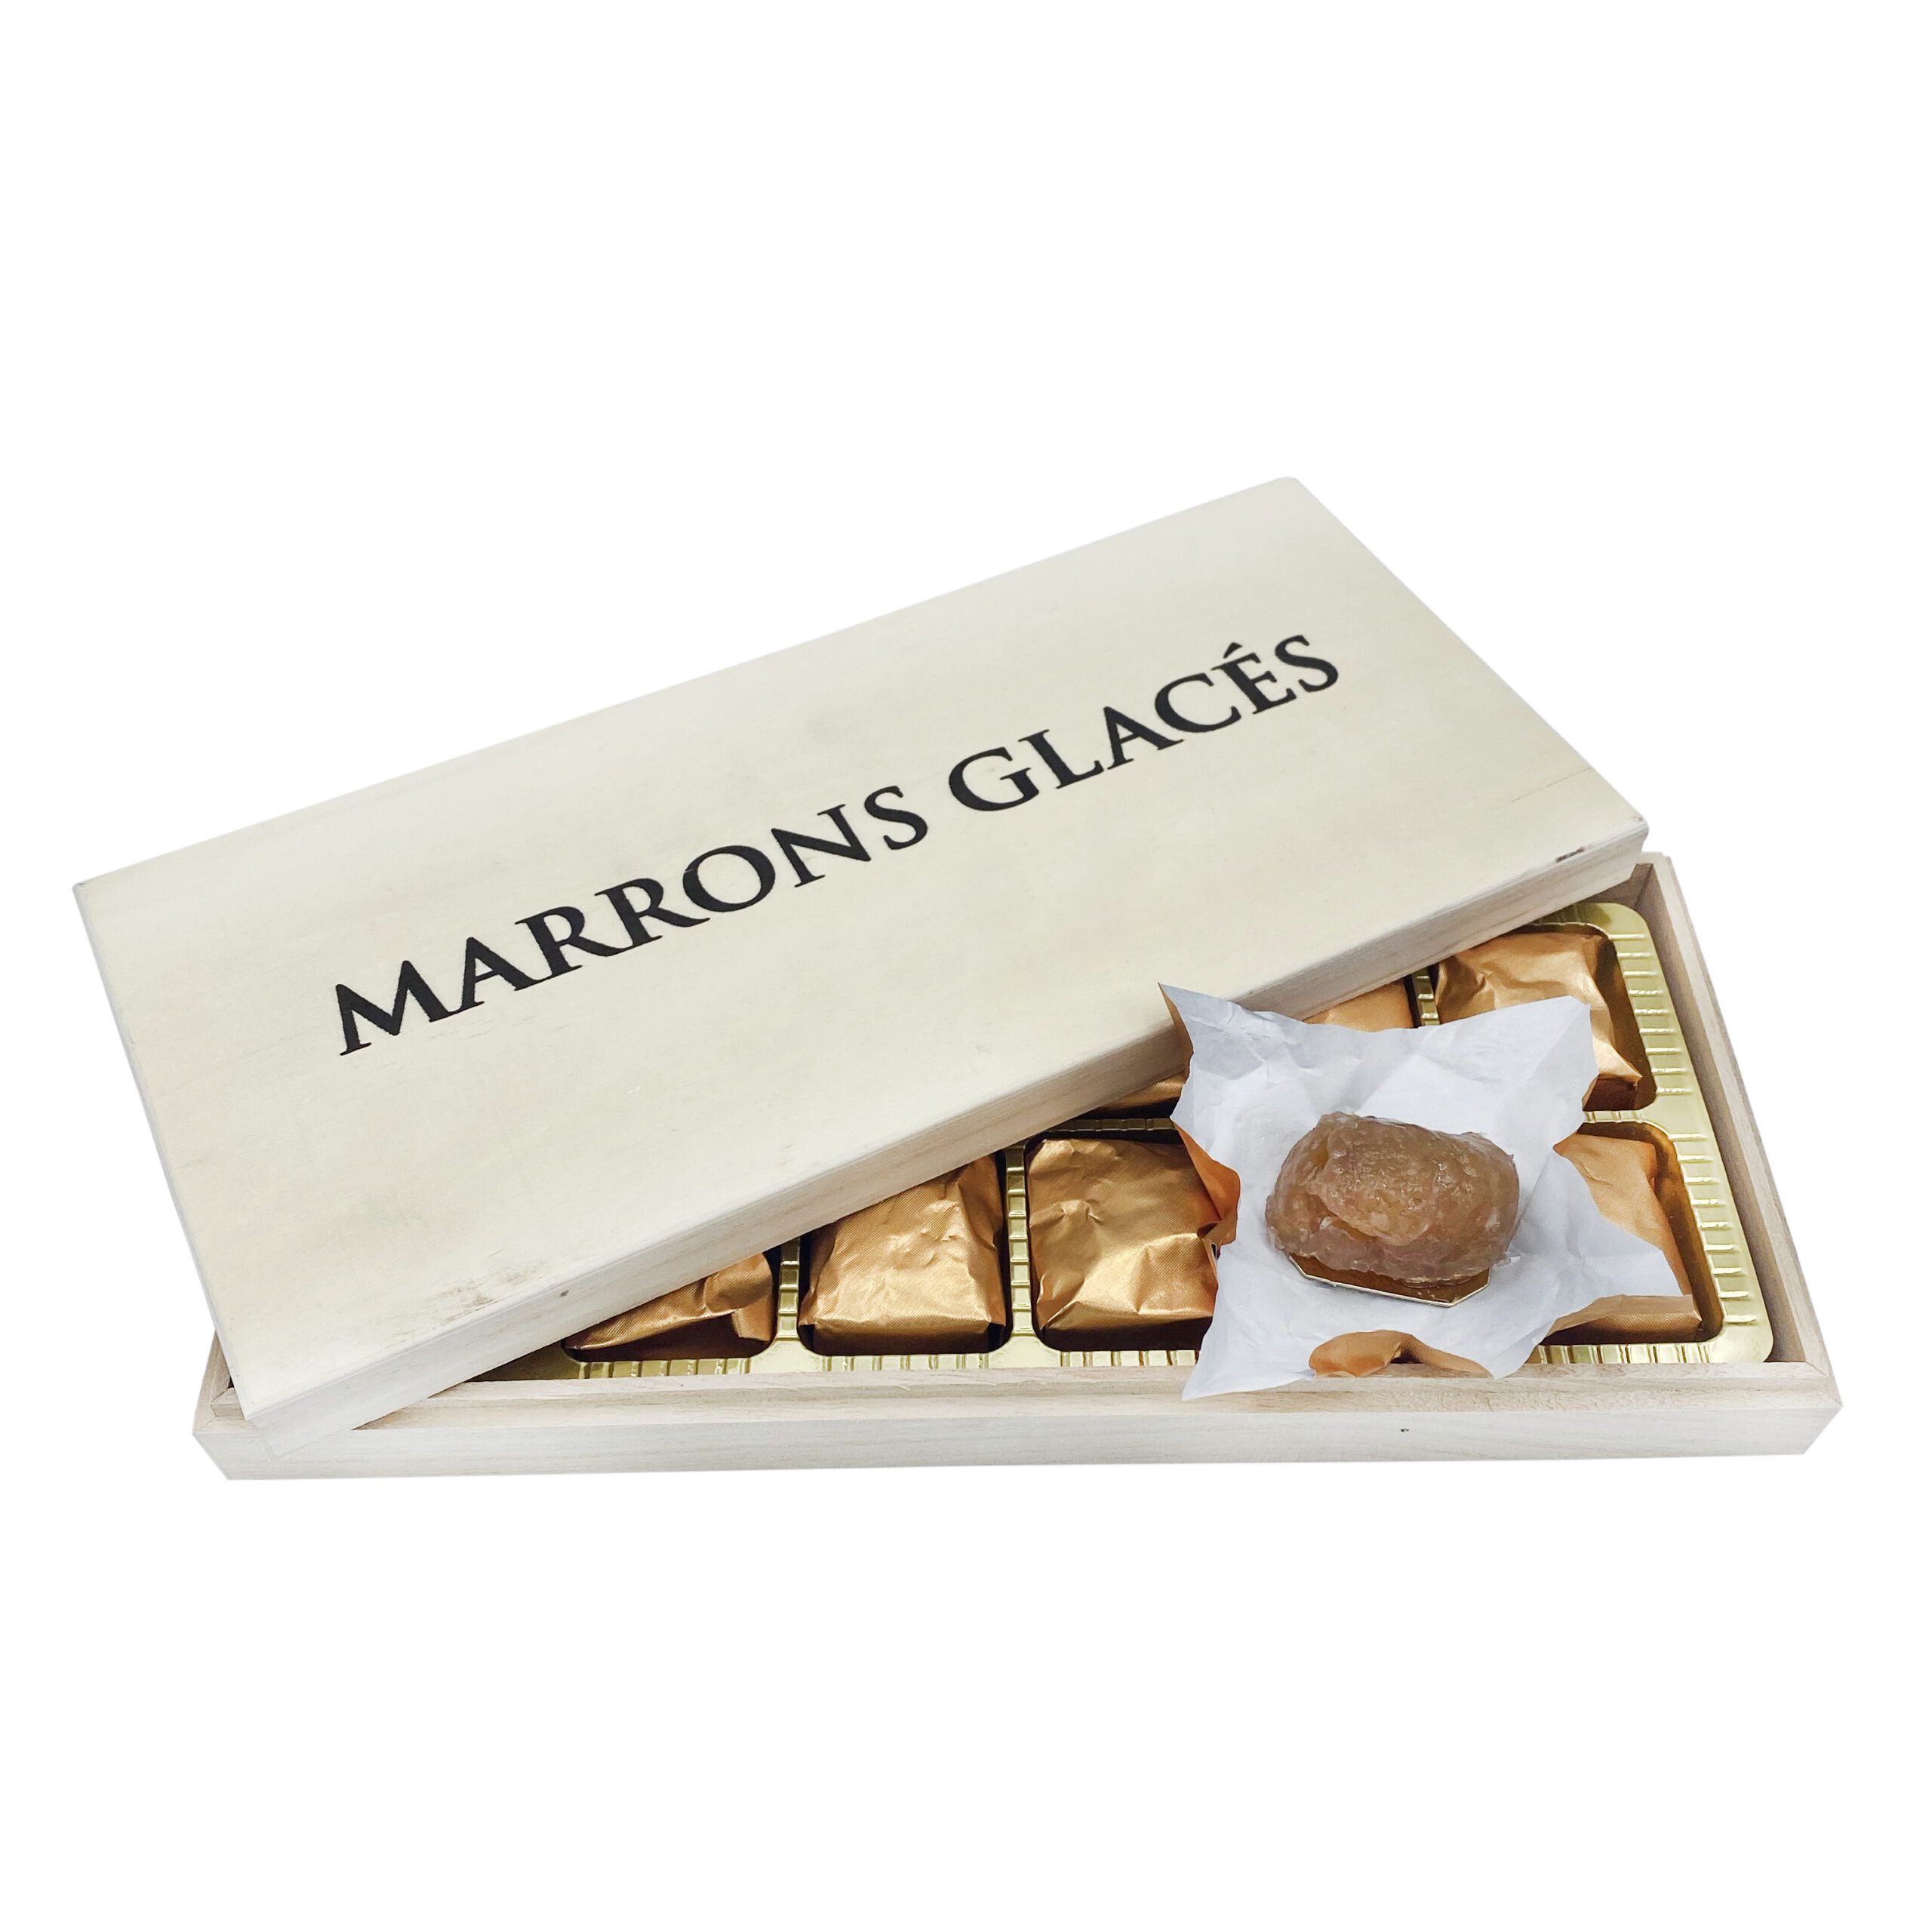 Single Marron Glacé/Candied Chestnut